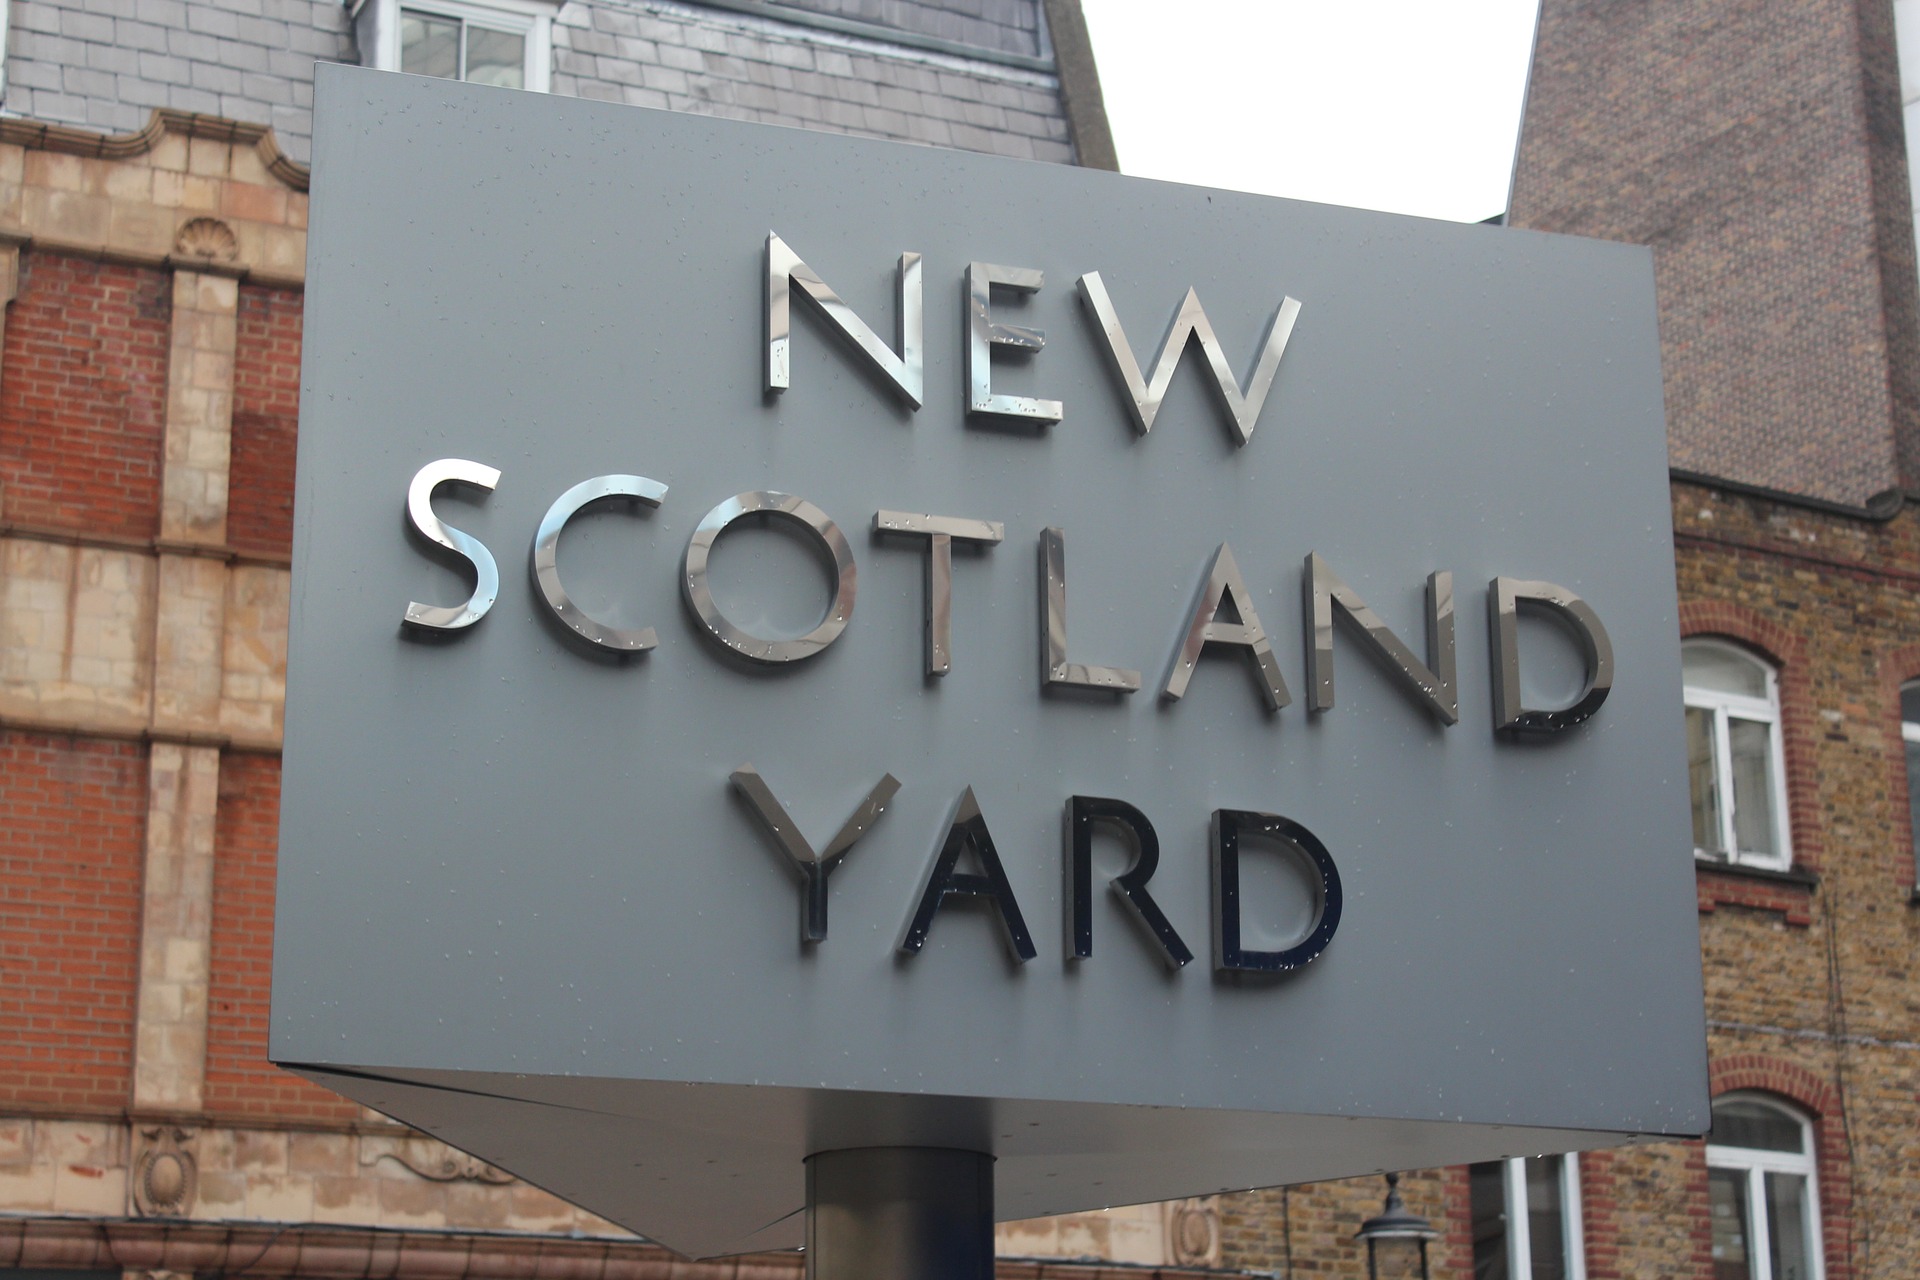 London Laundromat: Police seize £2 million profits of Italian mafia gang held in British banks (Evening Standard)